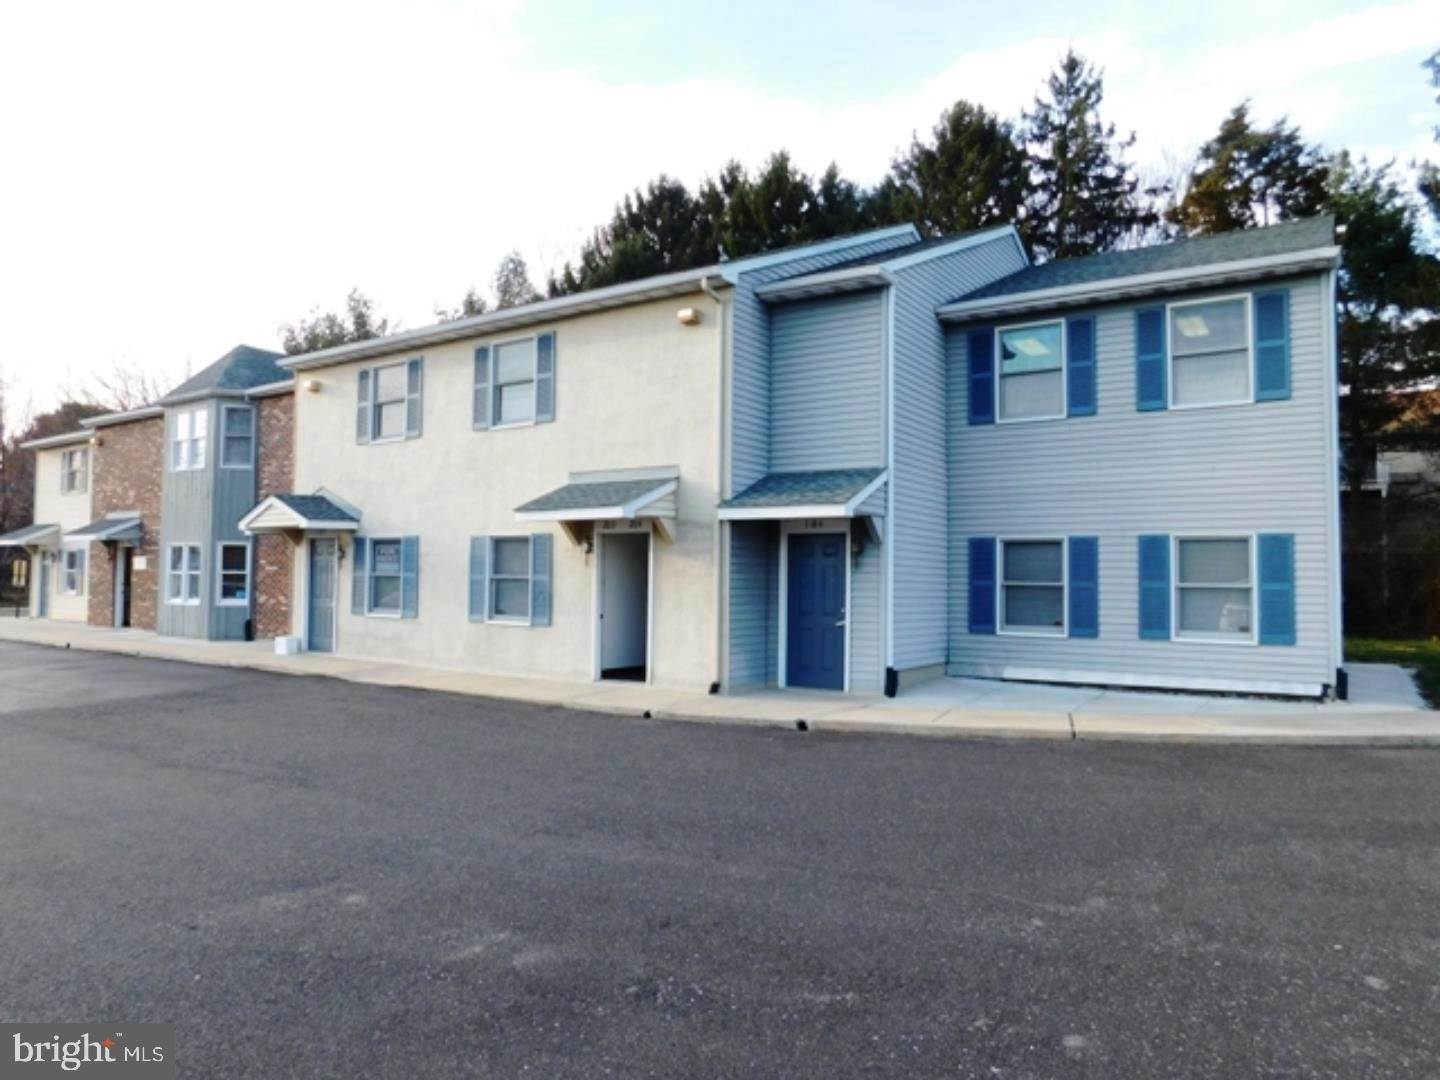 Single Family Homes για την Πώληση στο Mount Laurel, Νιου Τζερσεϋ 08054 Ηνωμένες Πολιτείες